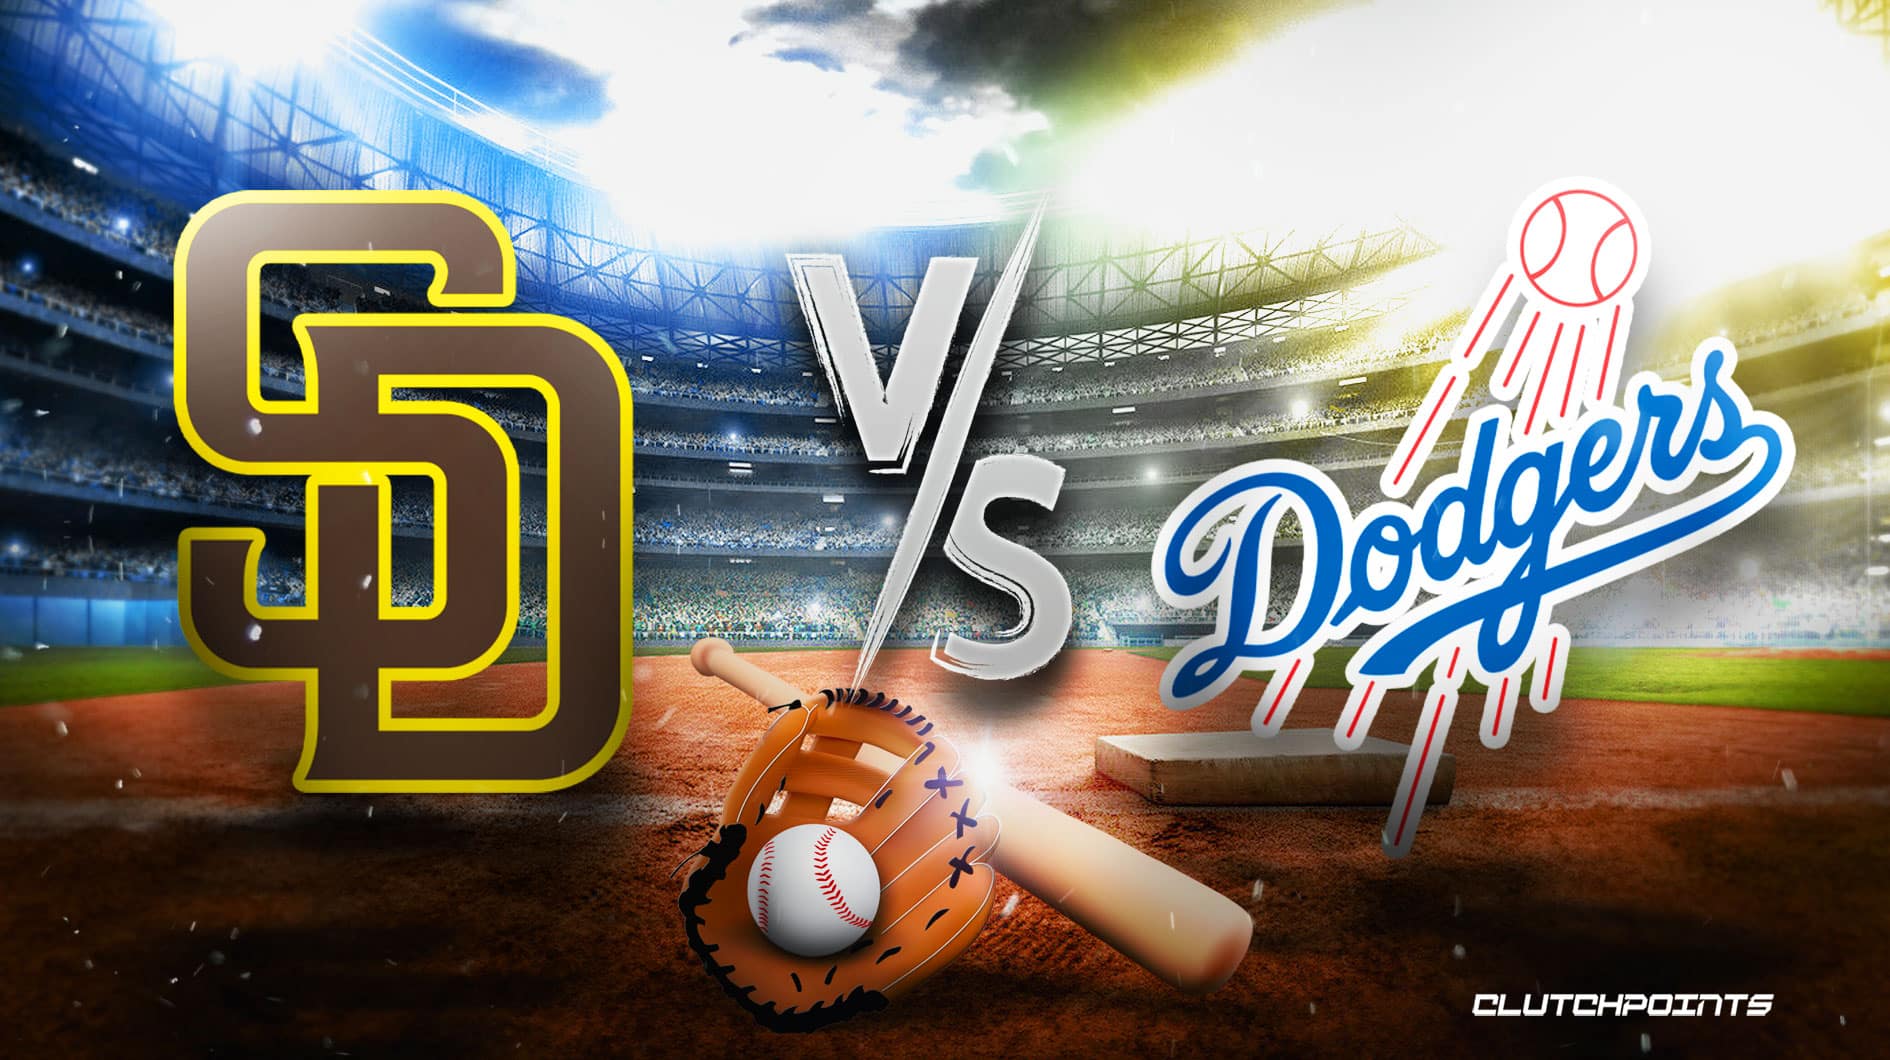 San Diego Padres vs. Los Angeles Dodgers Game 2 FREE LIVE STREAM